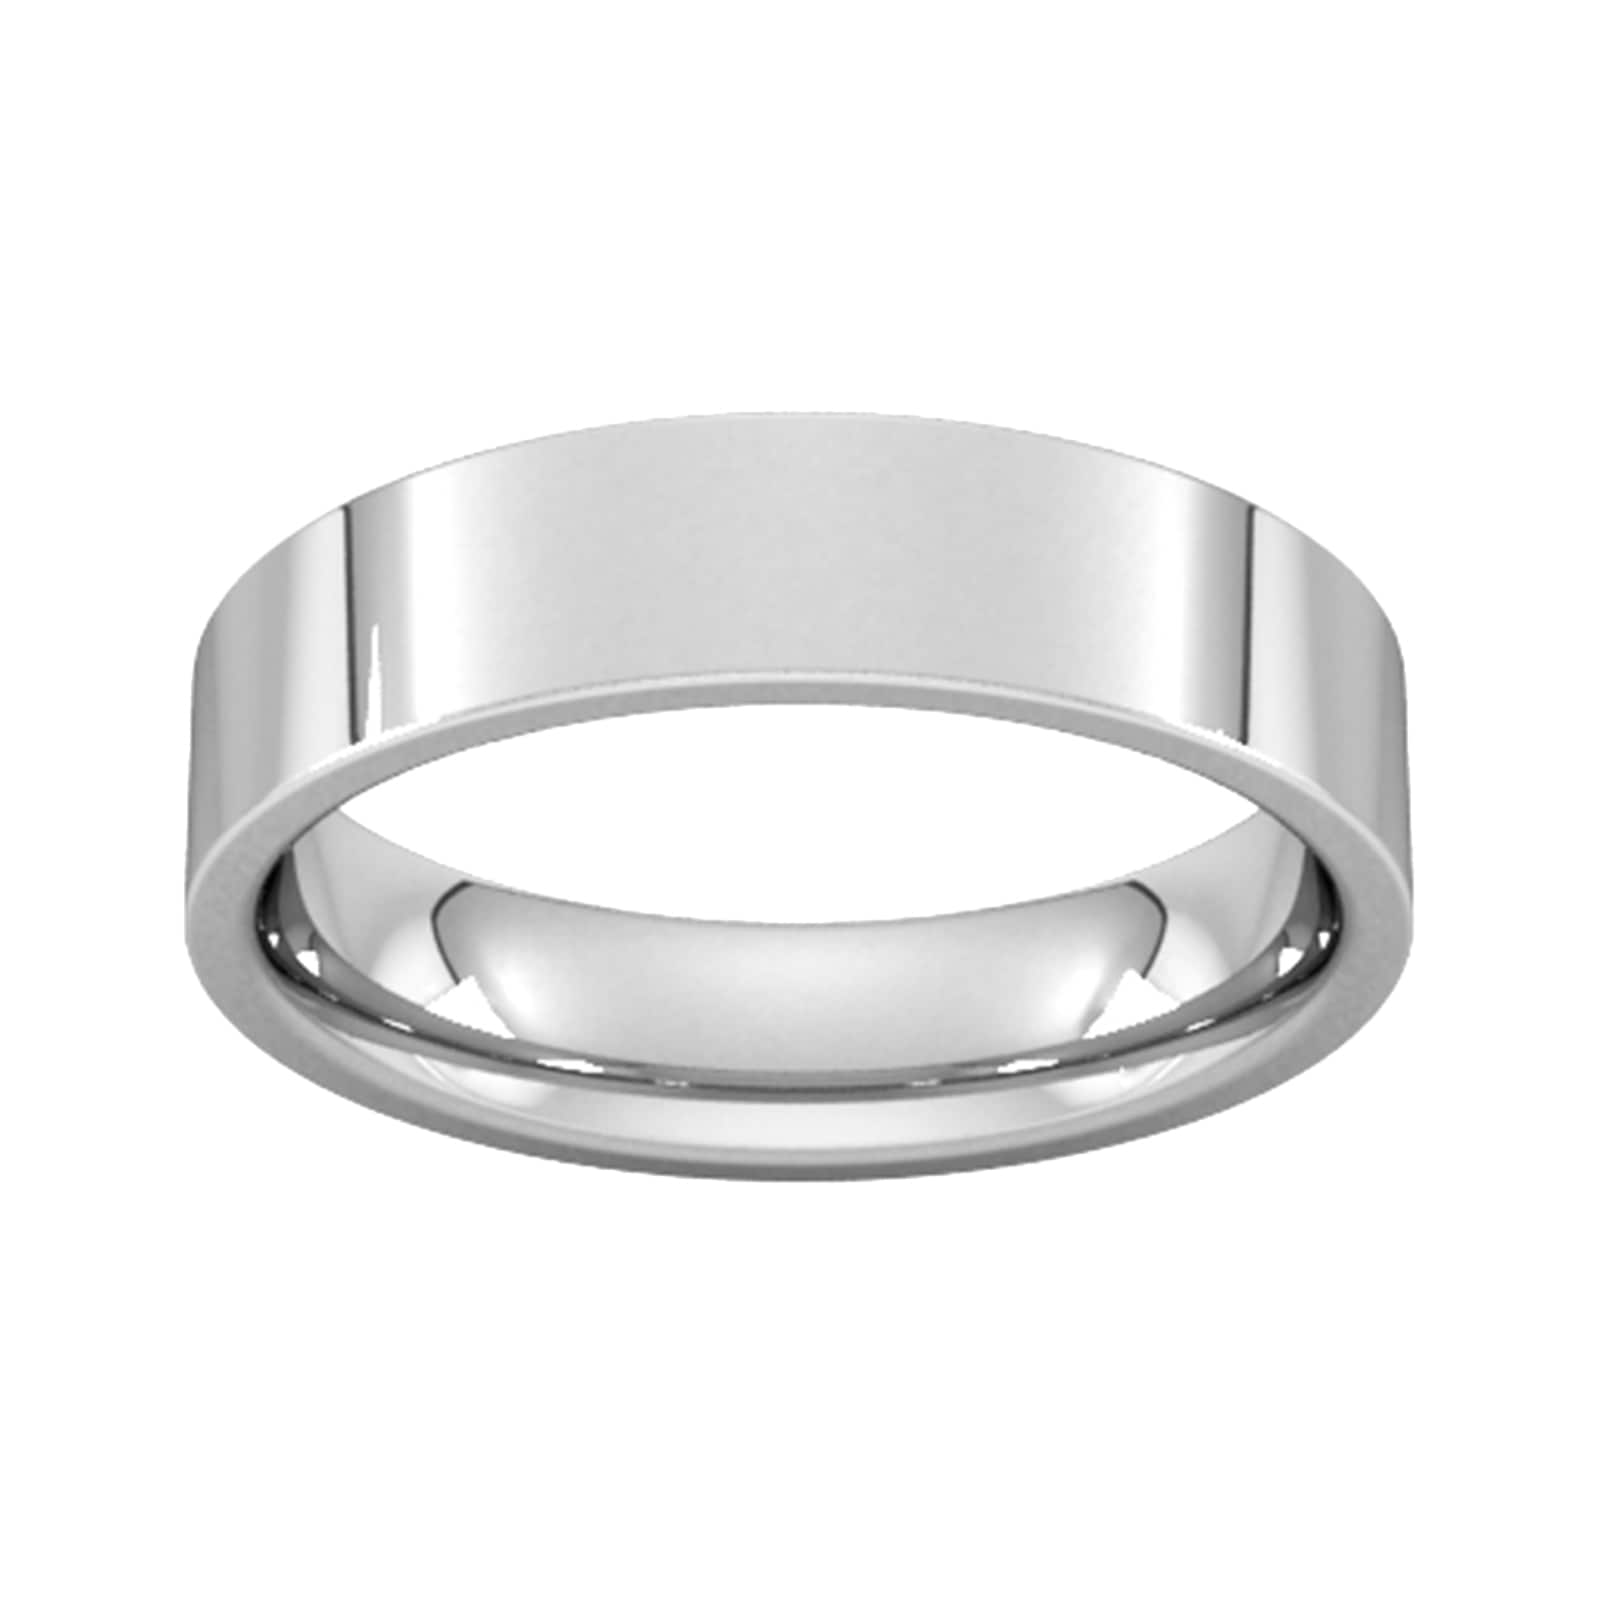 5mm Flat Court Heavy Wedding Ring In 950 Palladium - Ring Size O